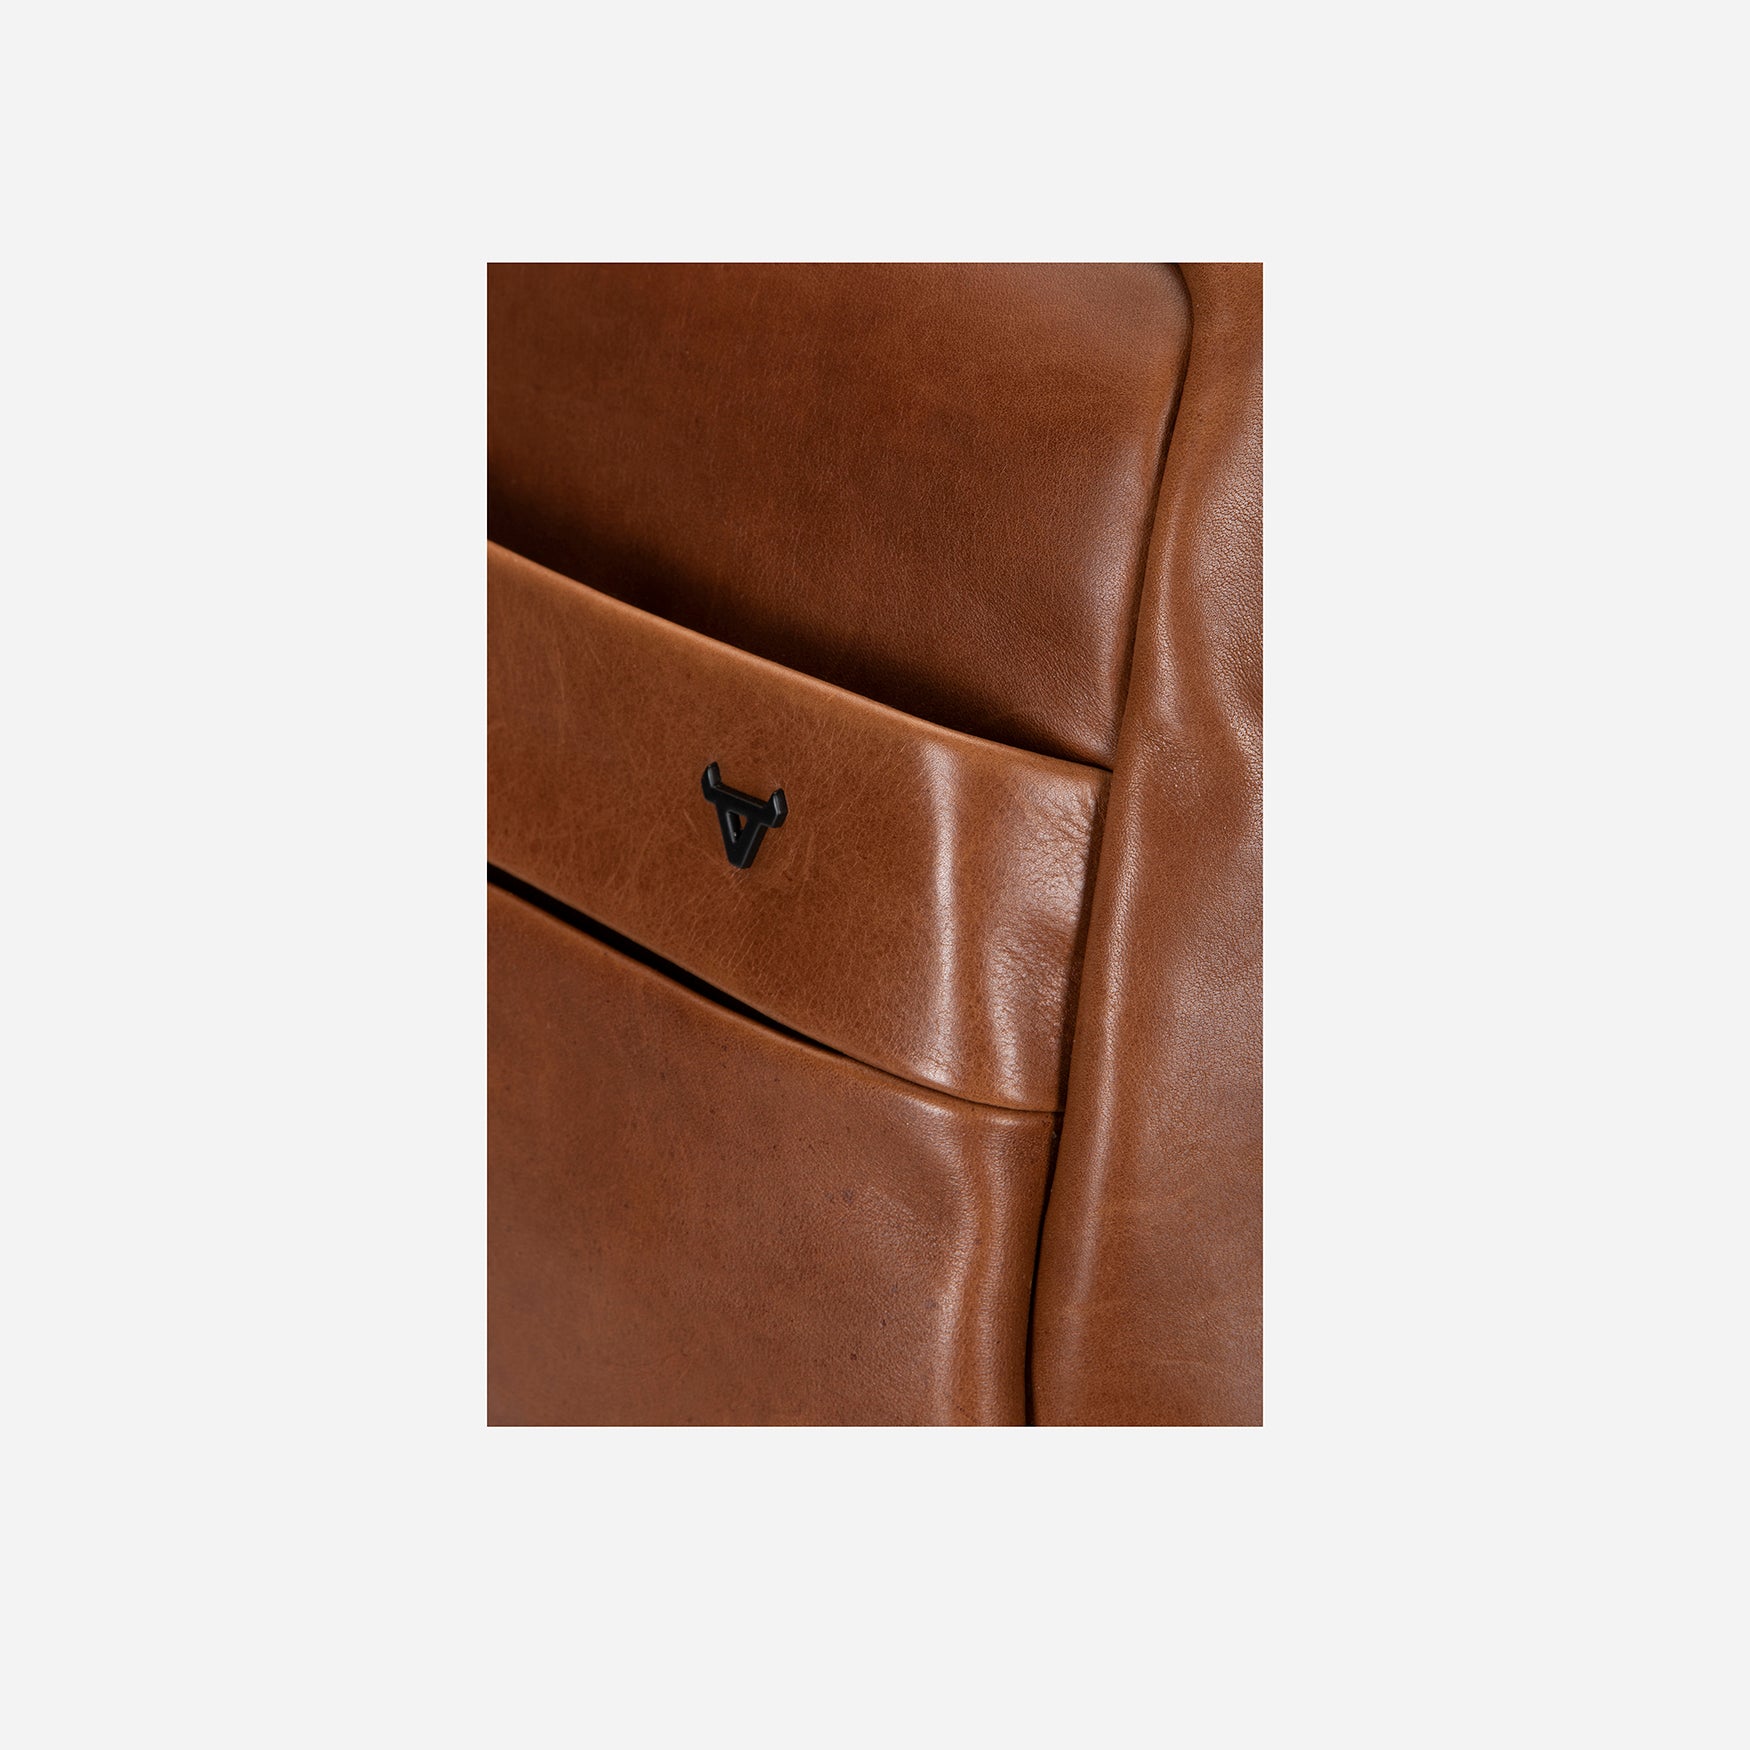 15" Mens Leather Laptop Backpack, Medium Brown